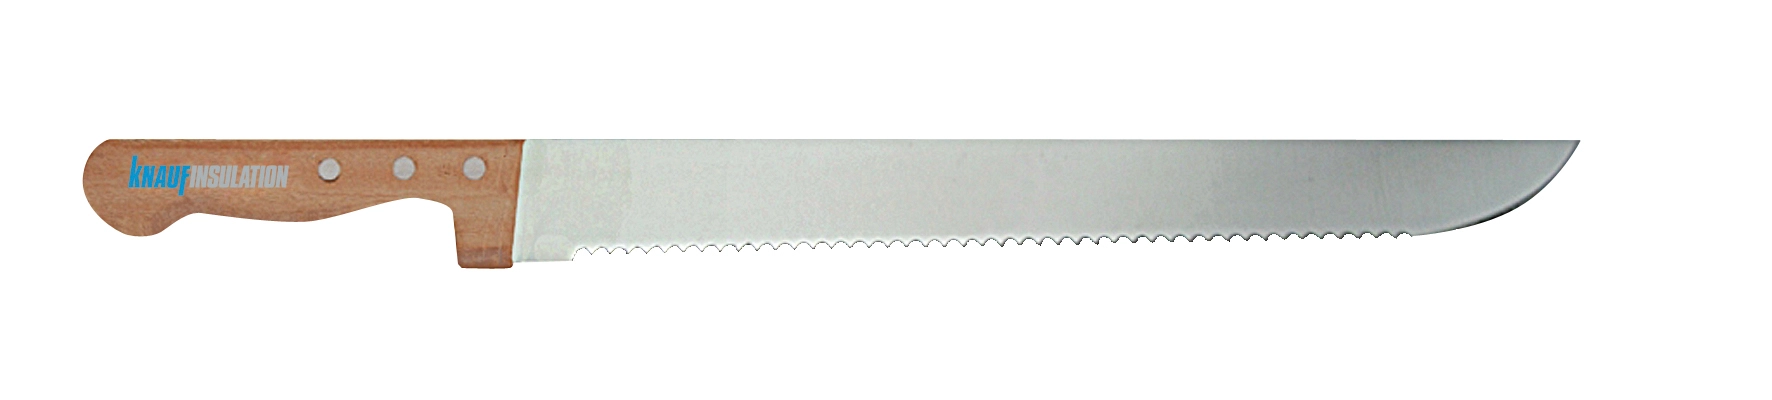 Knauf - Isolatiemes - Insulation Knife